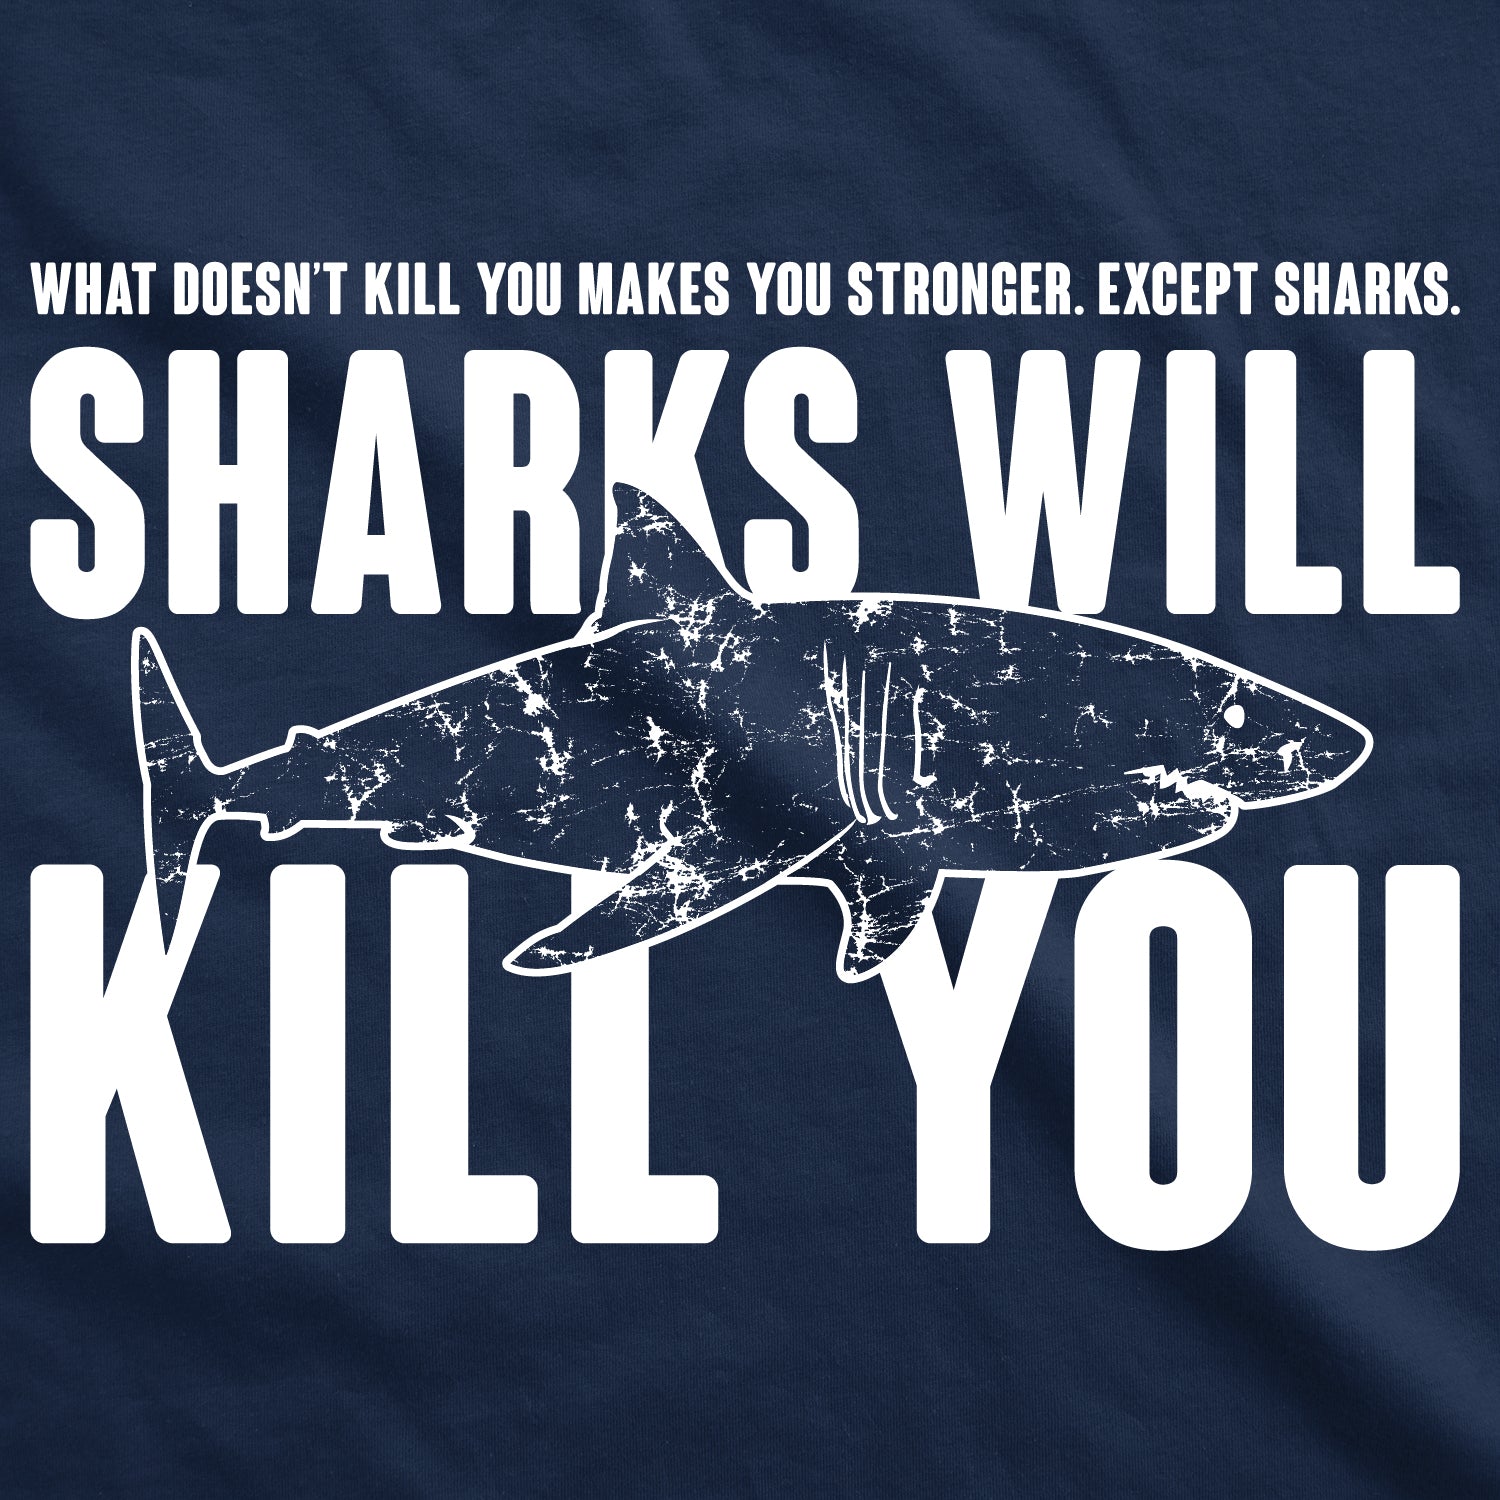 Funny Sharks Will Kill You Mens T Shirt Nerdy Shark Week Sarcastic Tee